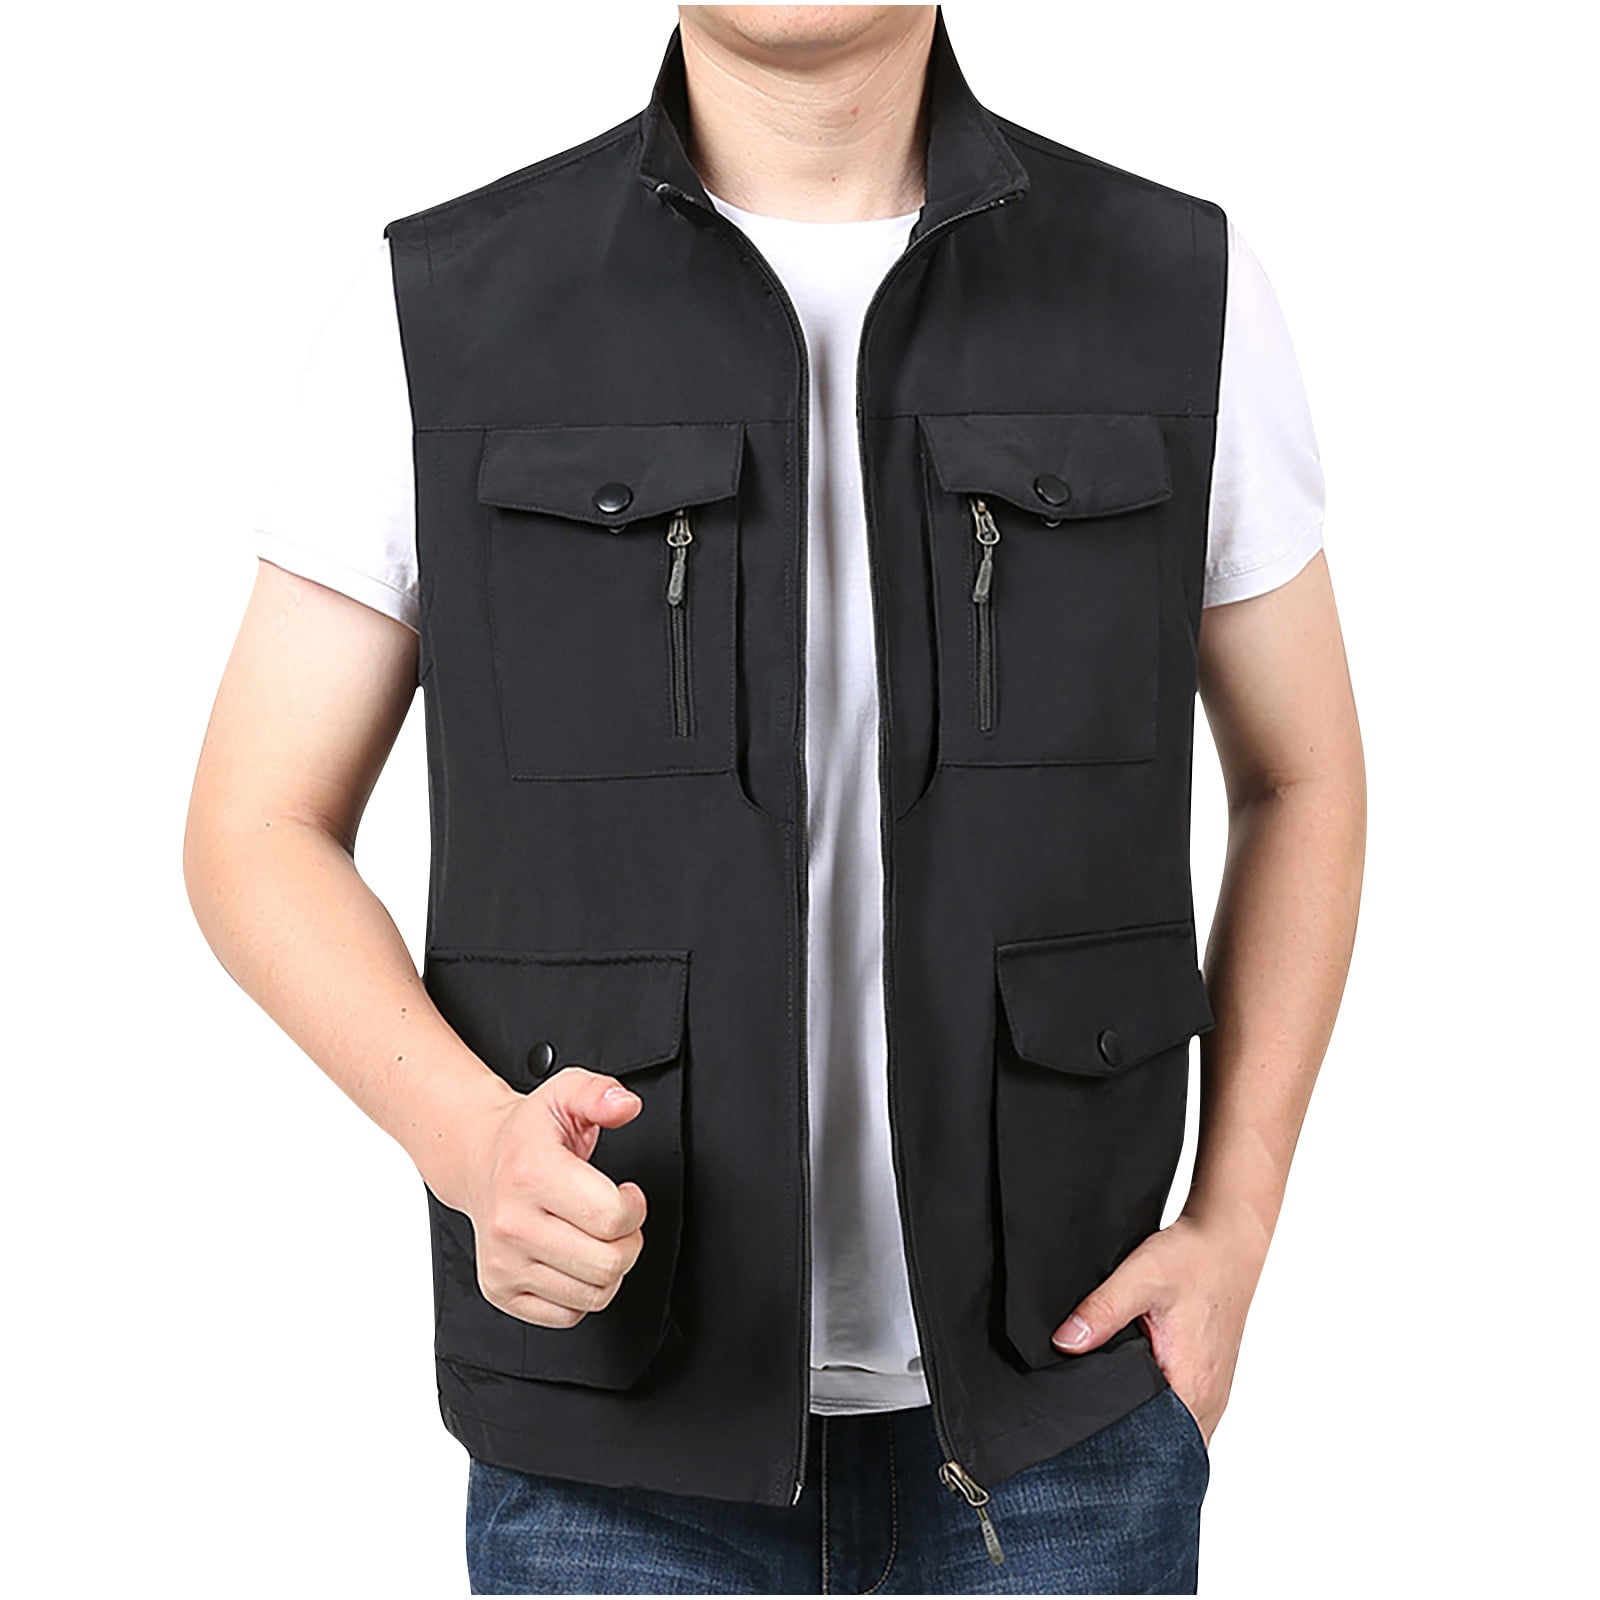 VSSSJ Men's Work Vest with Multi-Pockets Relaxed Solid Color Sleeveless ...